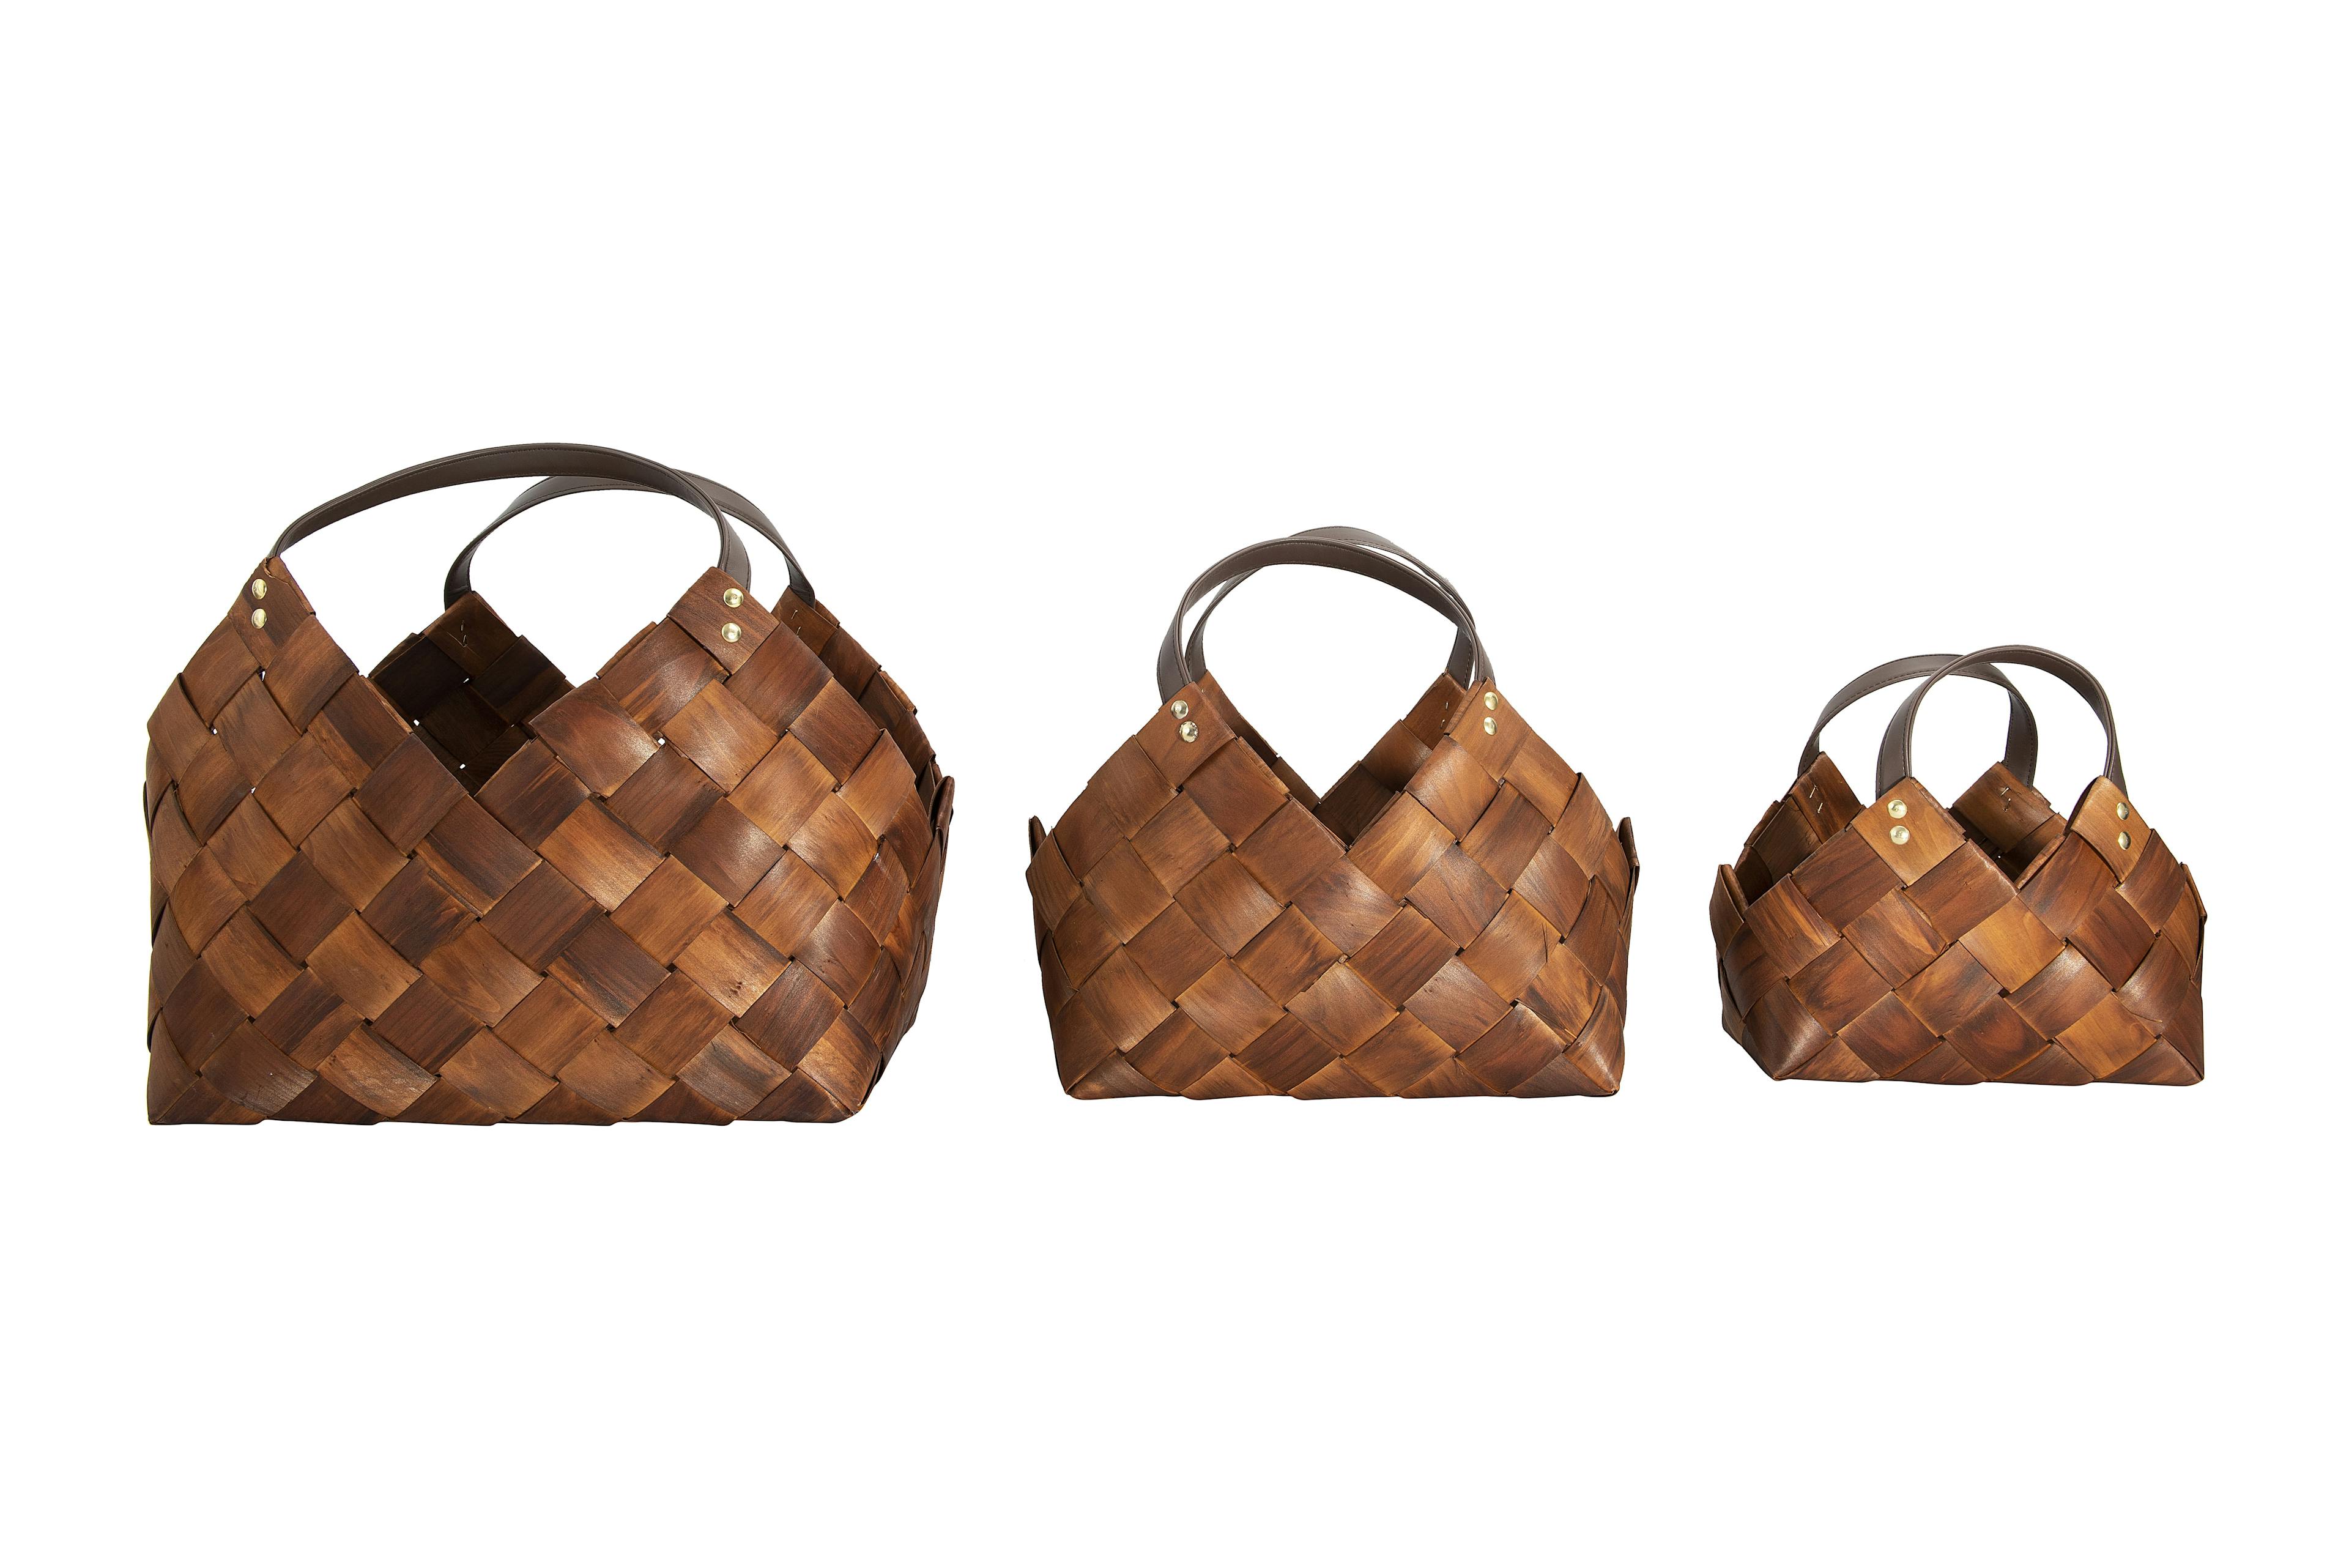 Elegant Rectangular Seagrass Storage Baskets with Leather Handles - Set of 3